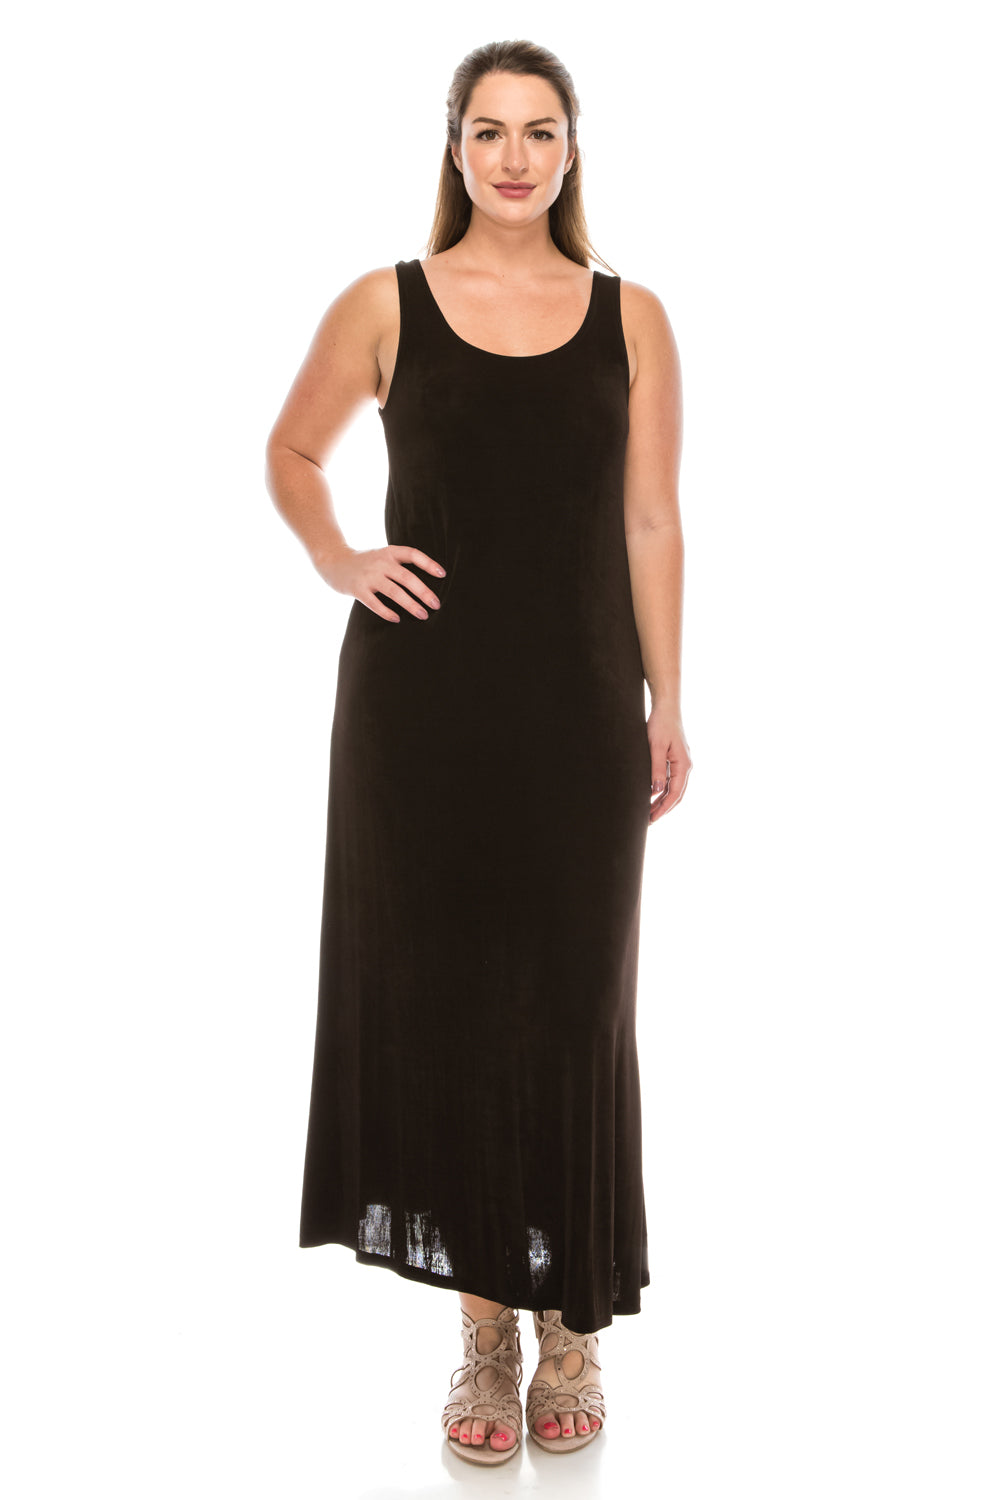 Jostar Women's Non Iron Long Tank Dress, 700AY-T - Jostar Online